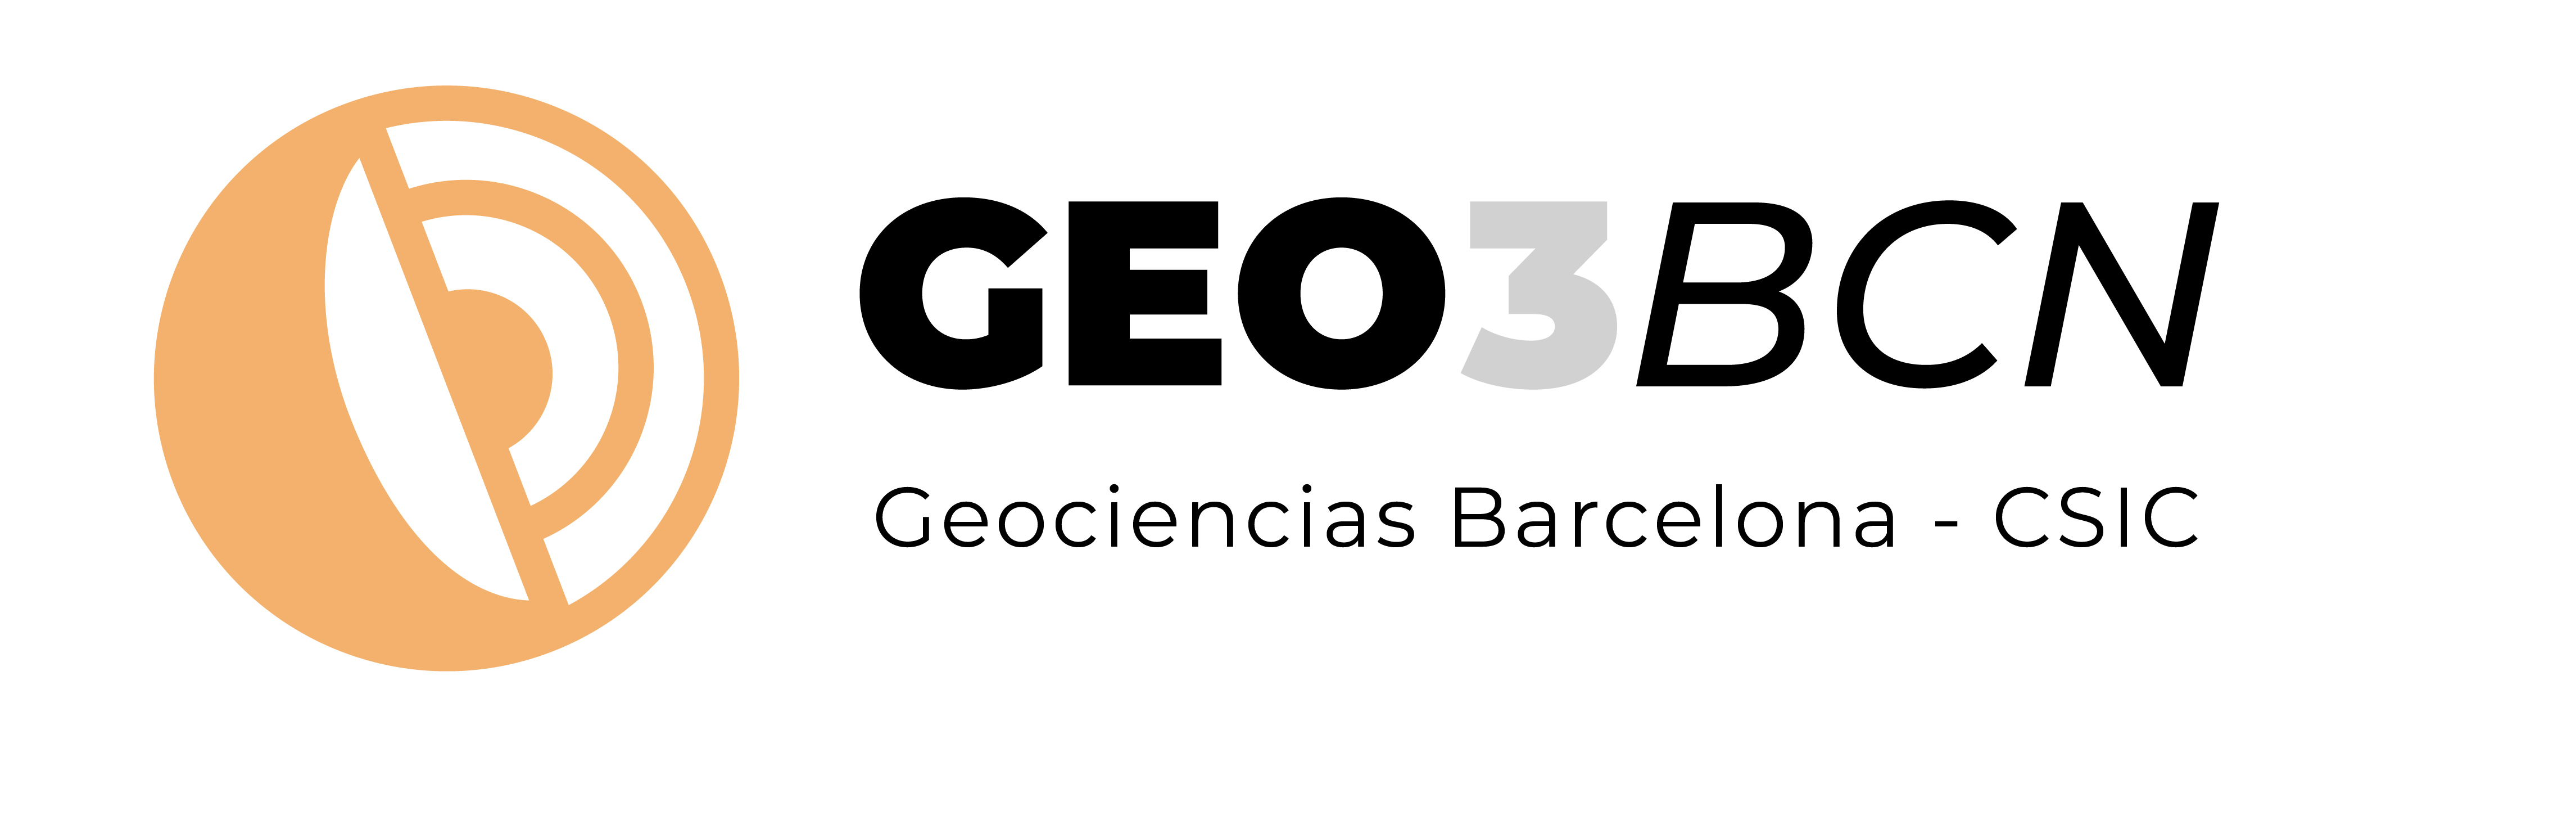 Institut Geosciències Barcelona (GEO3BCN, CSIC)